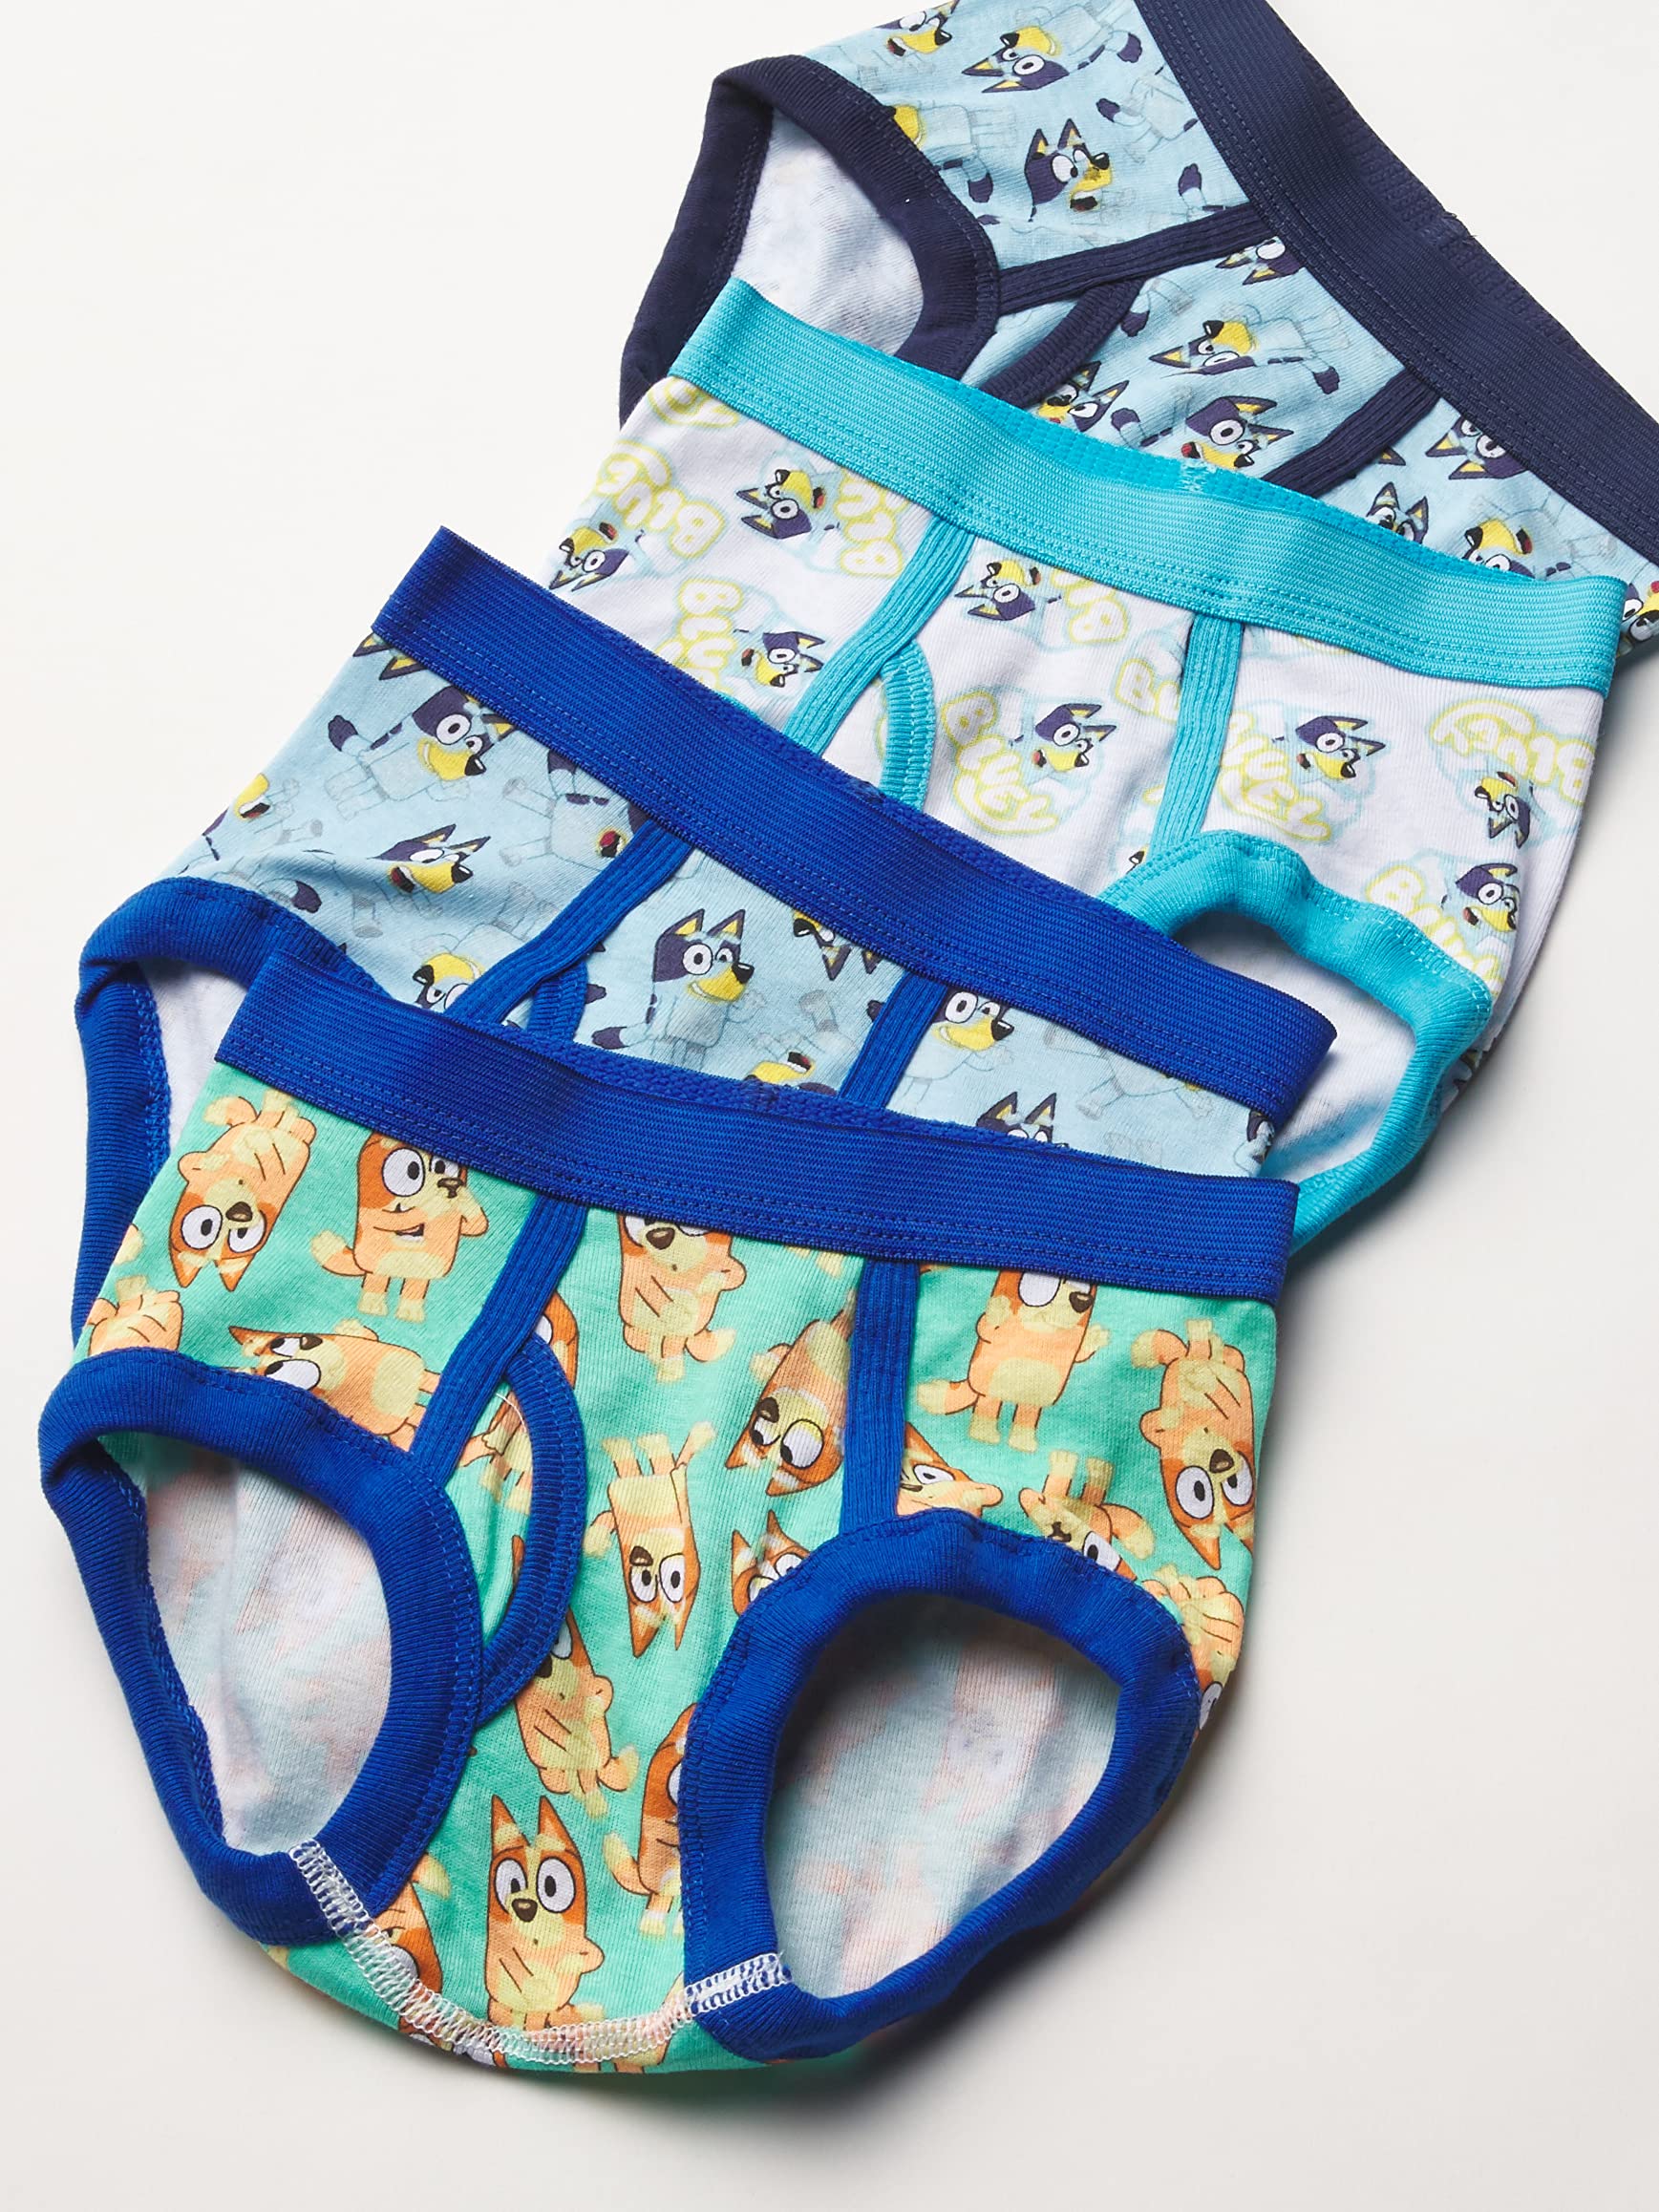 Bluey Boys' Underwear Multipack